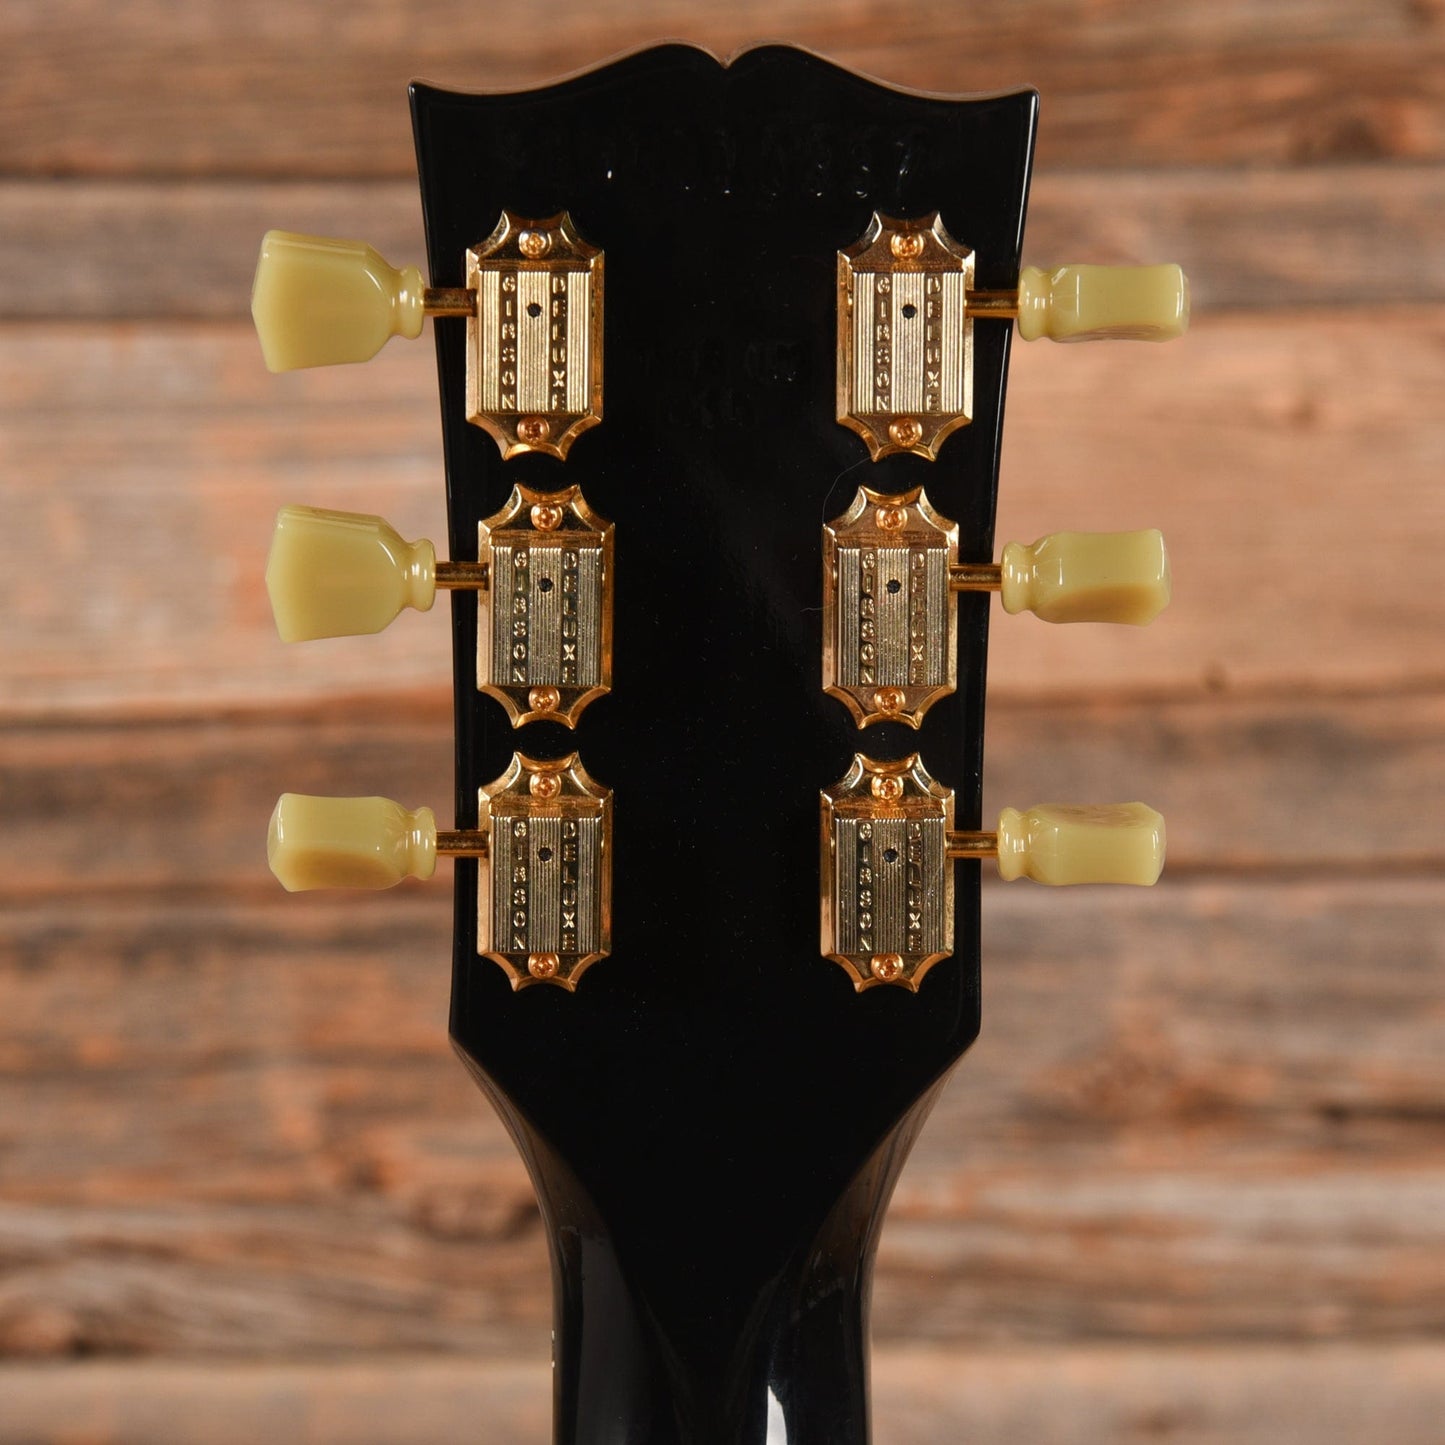 Gibson SG3 Ebony 2019 Electric Guitars / Solid Body